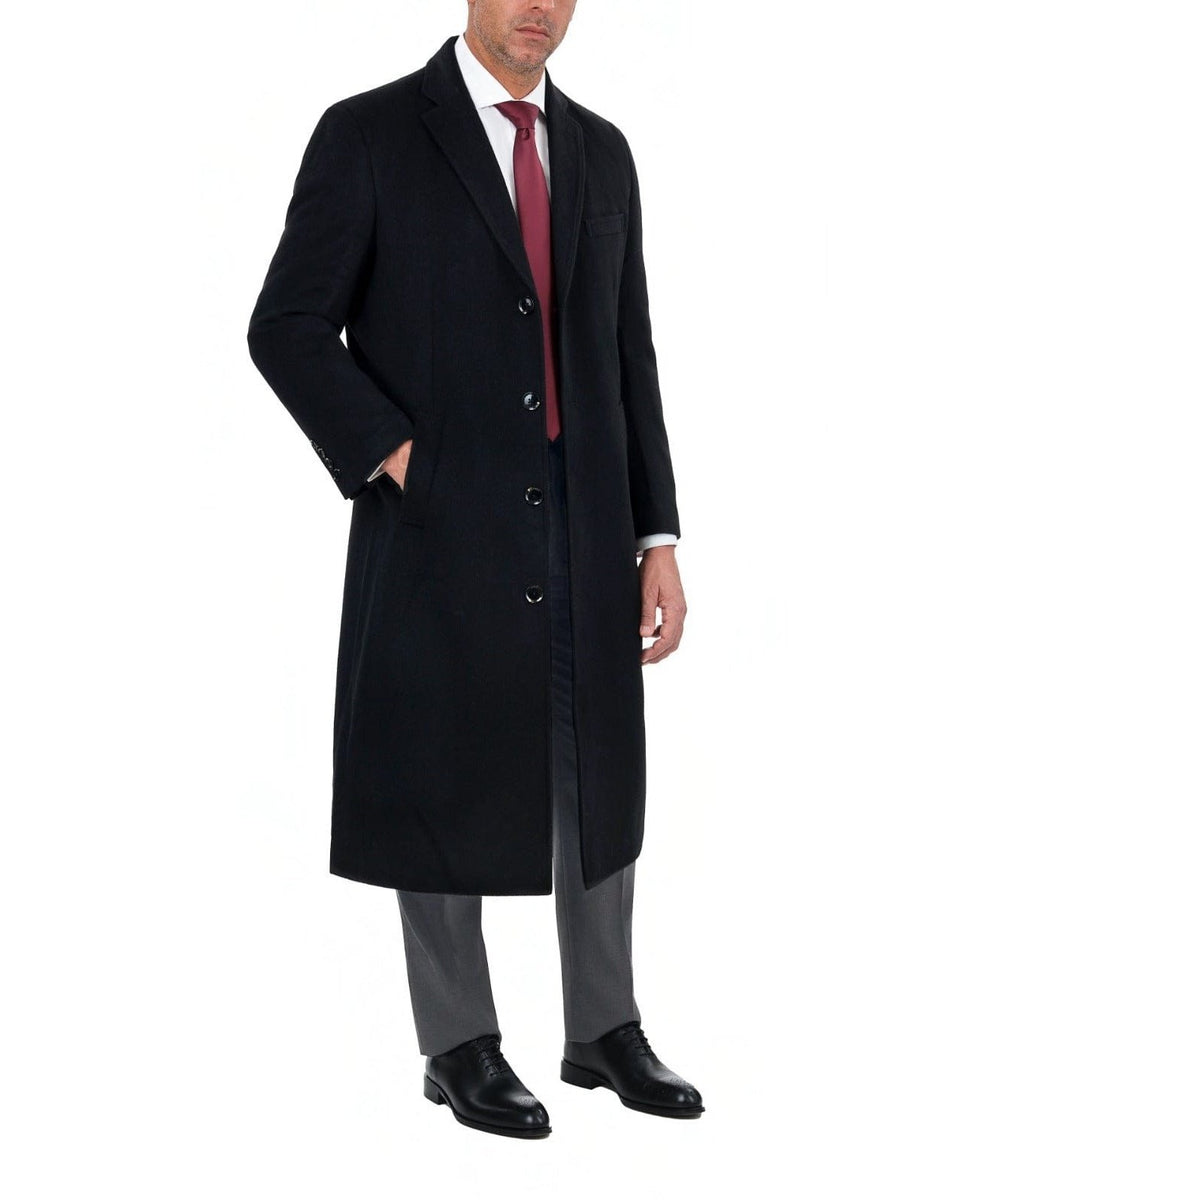 Arthur Black OUTERWEAR Regular Fit Solid Full Length Wool Cashmere Overcoat